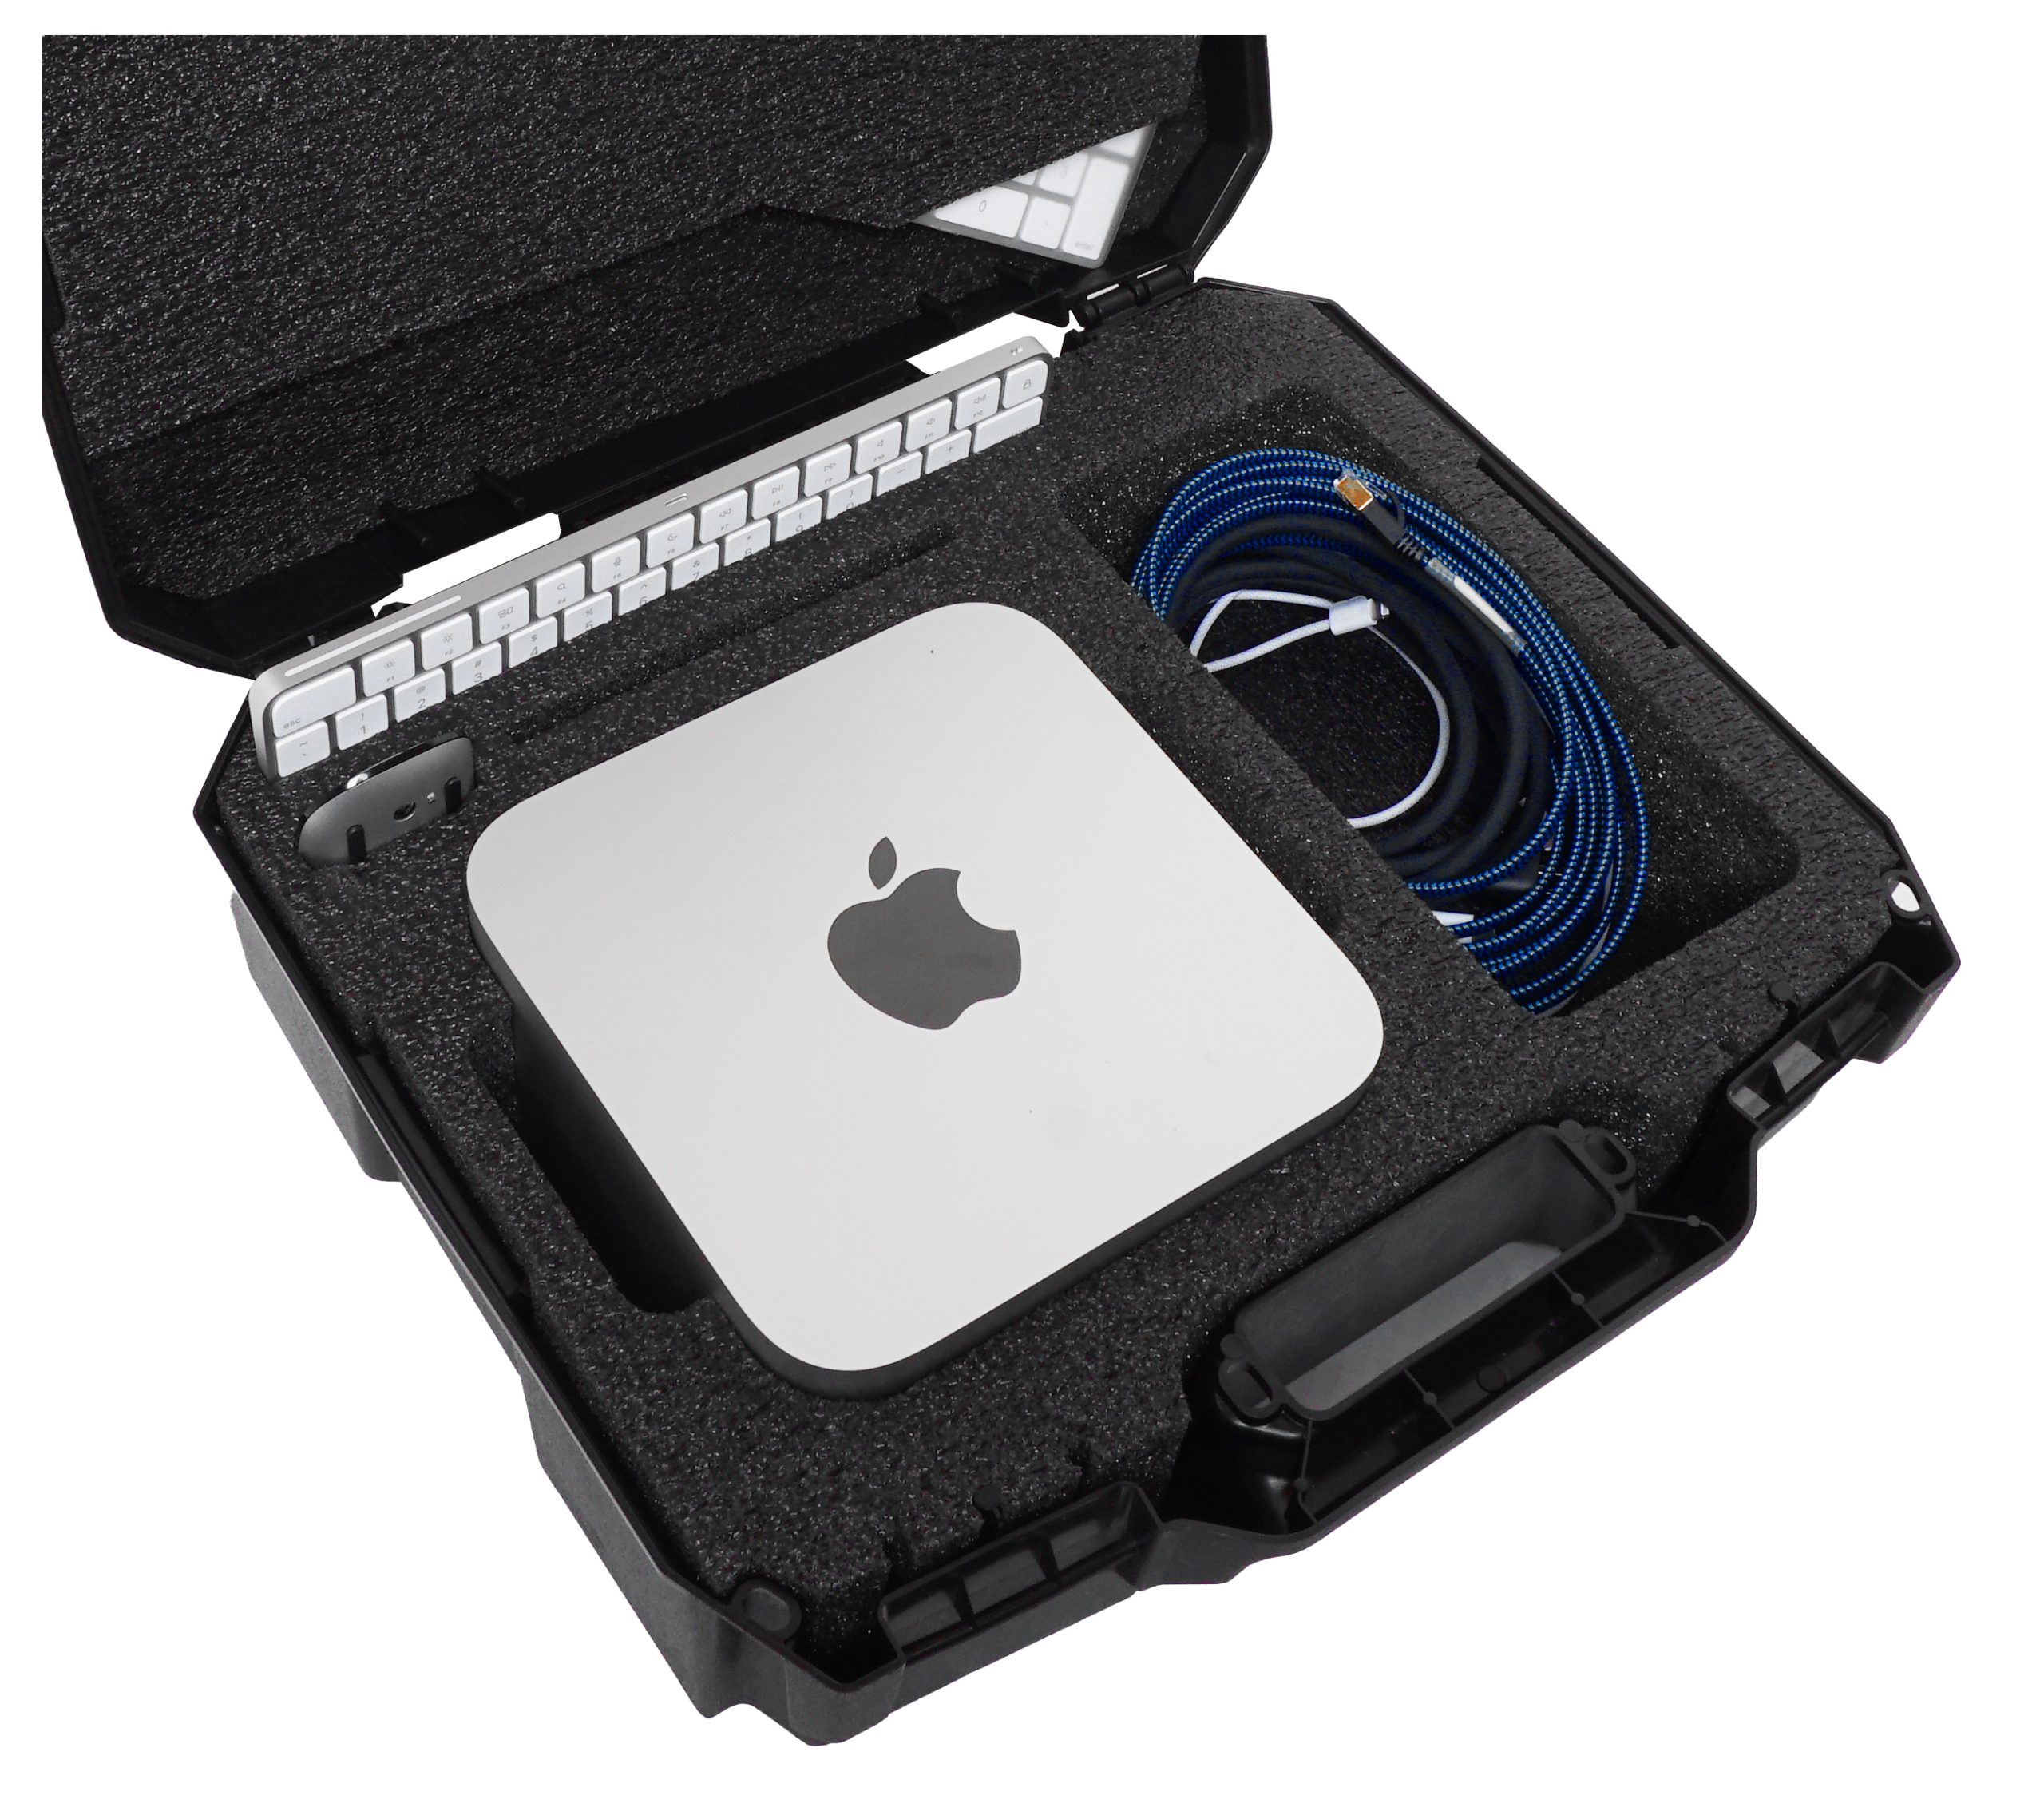 Mac Studio Carry Case